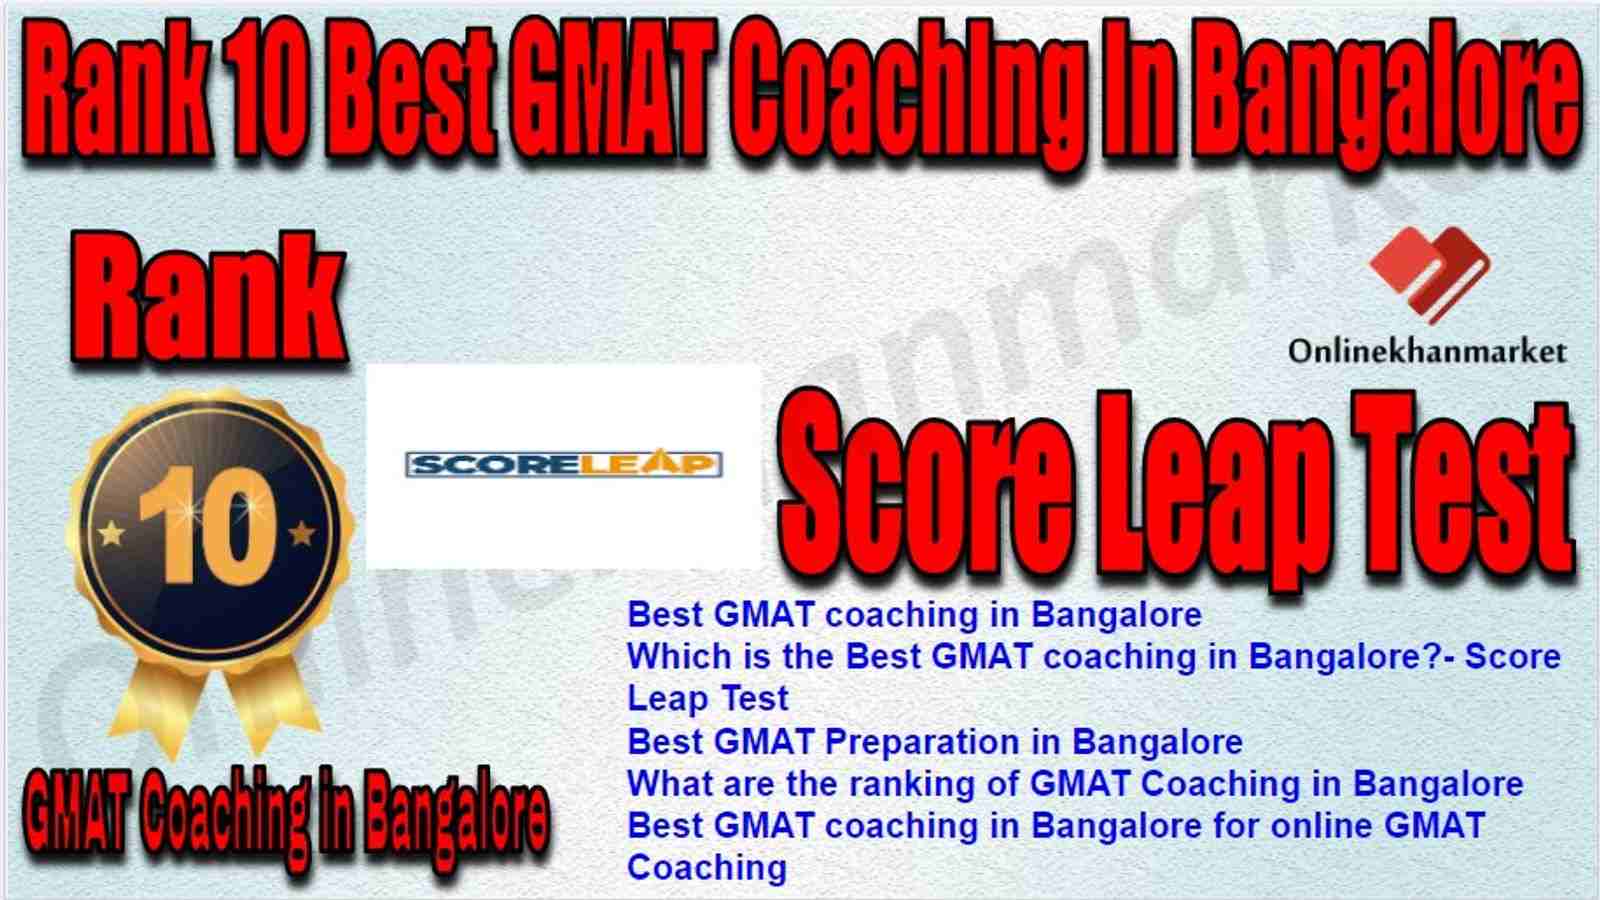 Rank 10 Best GMAT Coaching in Bangalore